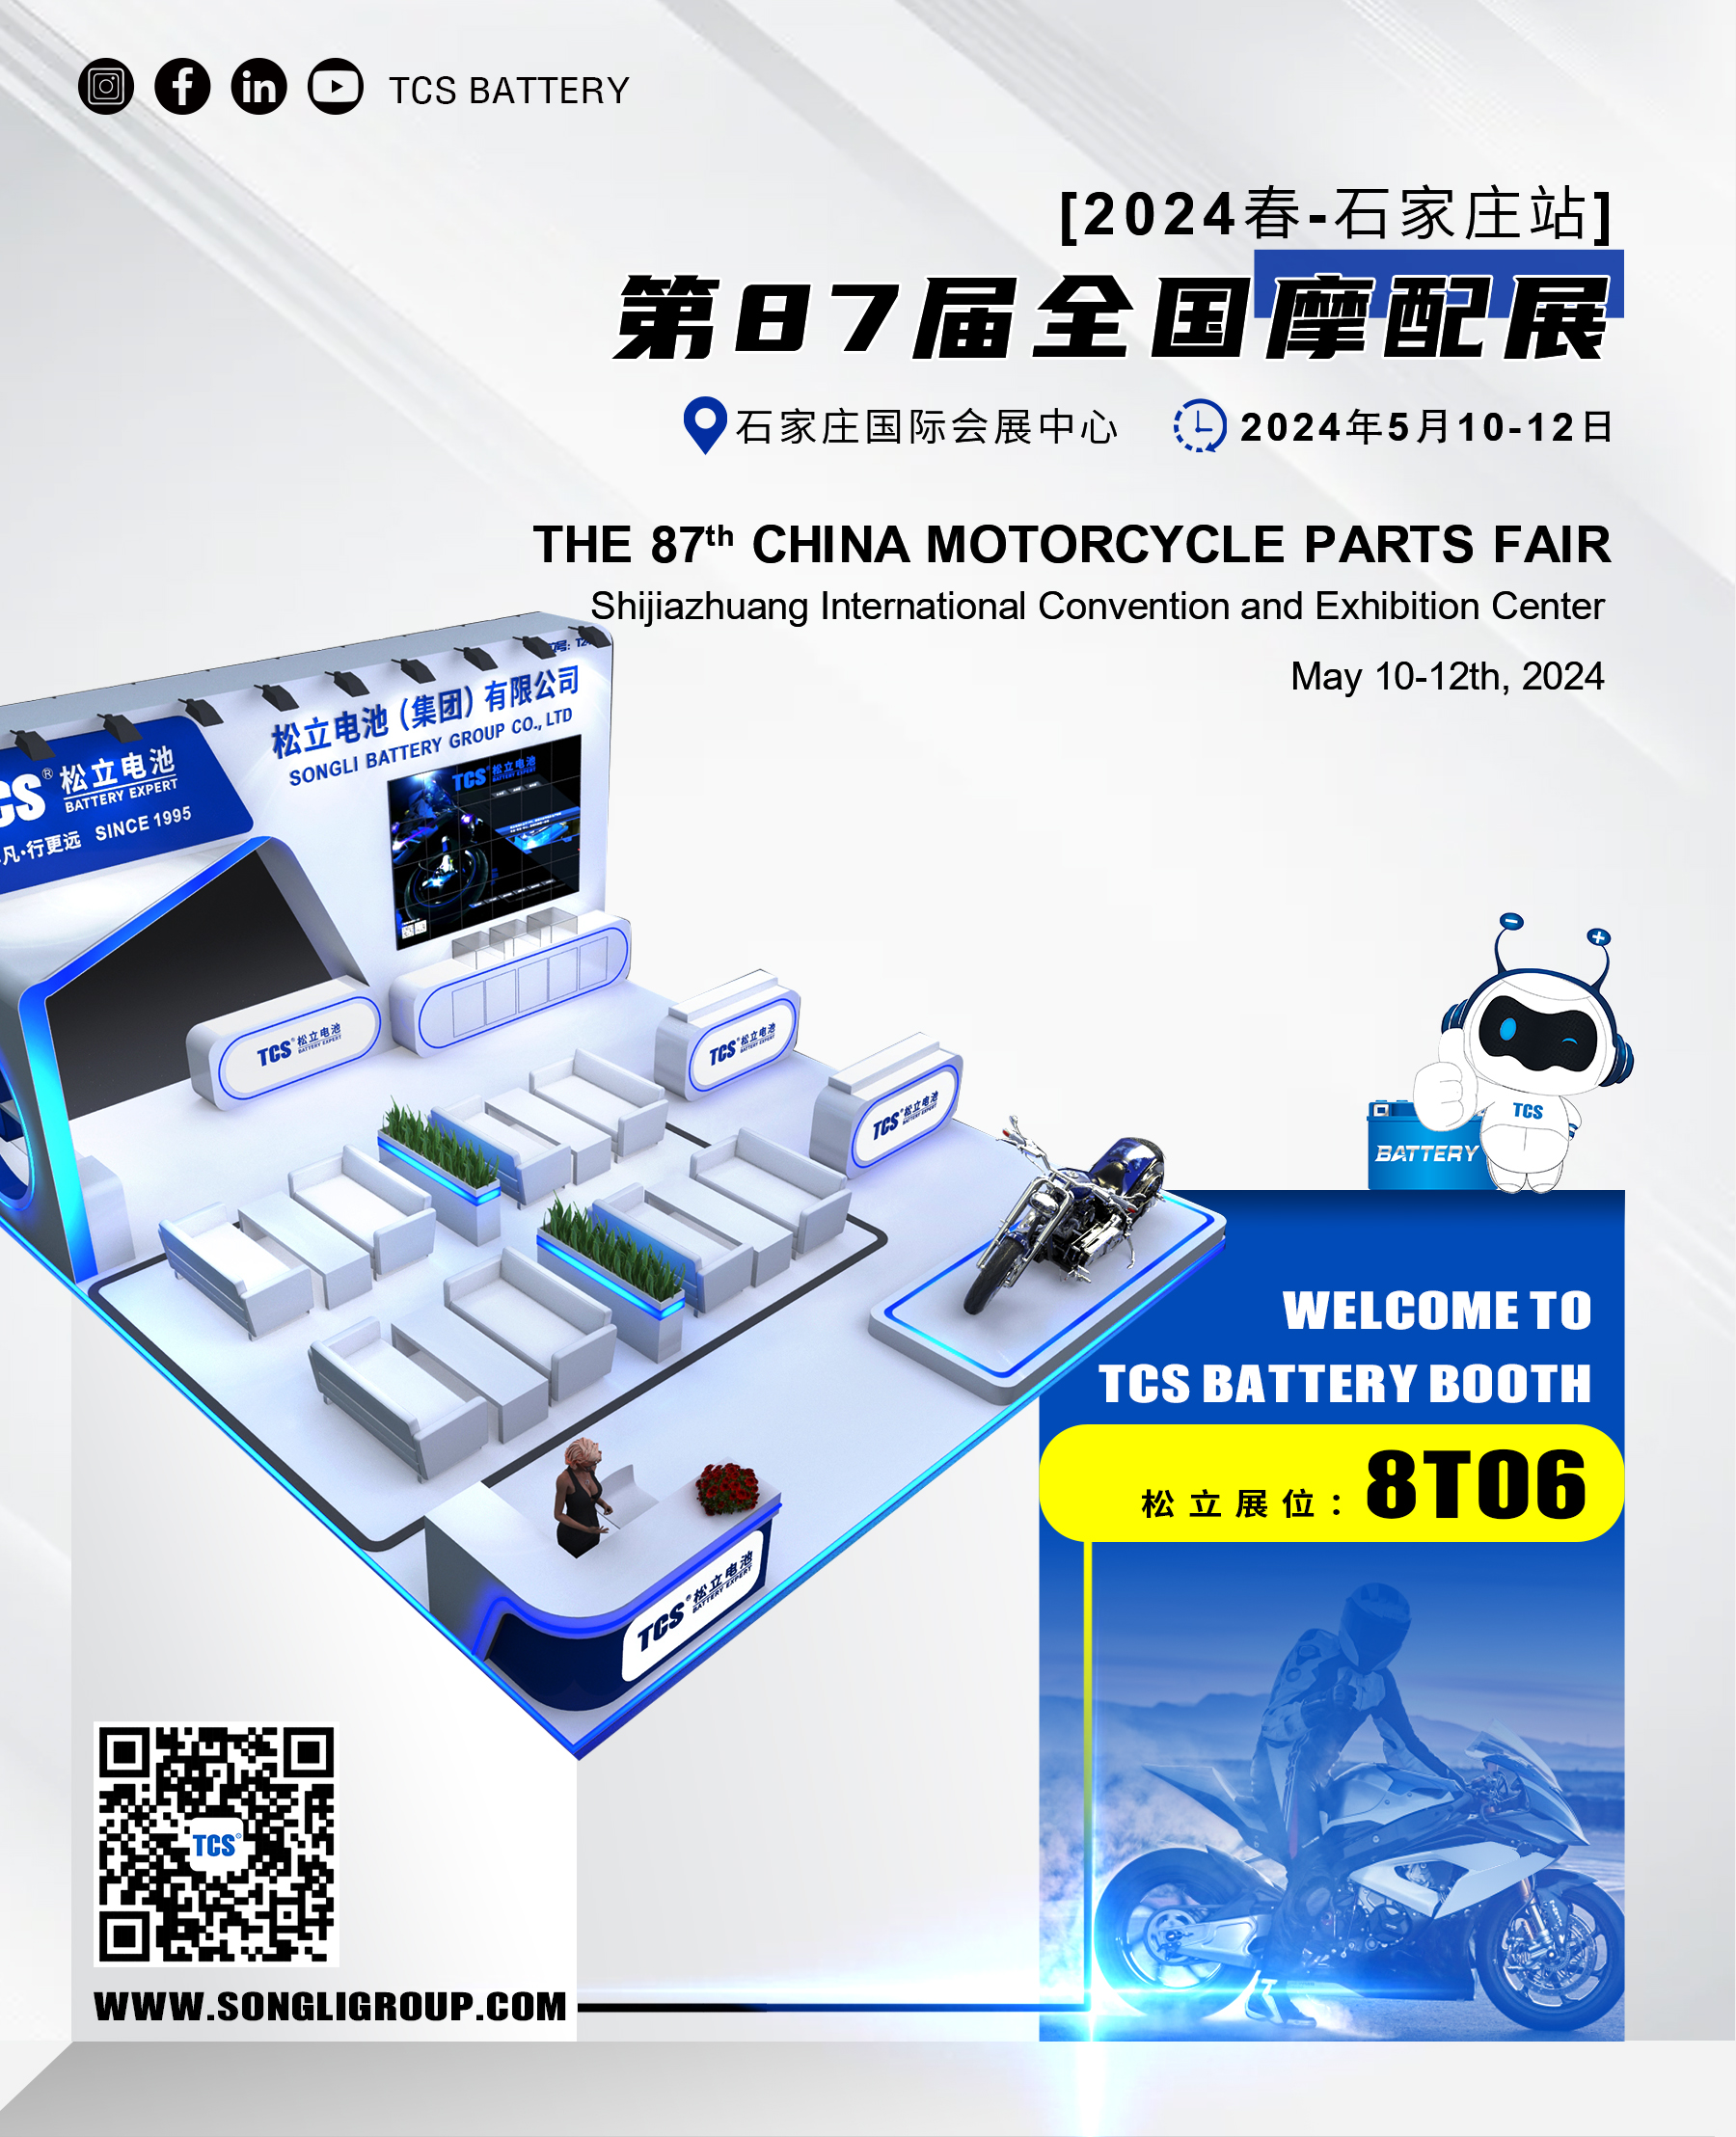 The 87th China Motorcycle Parts Fair